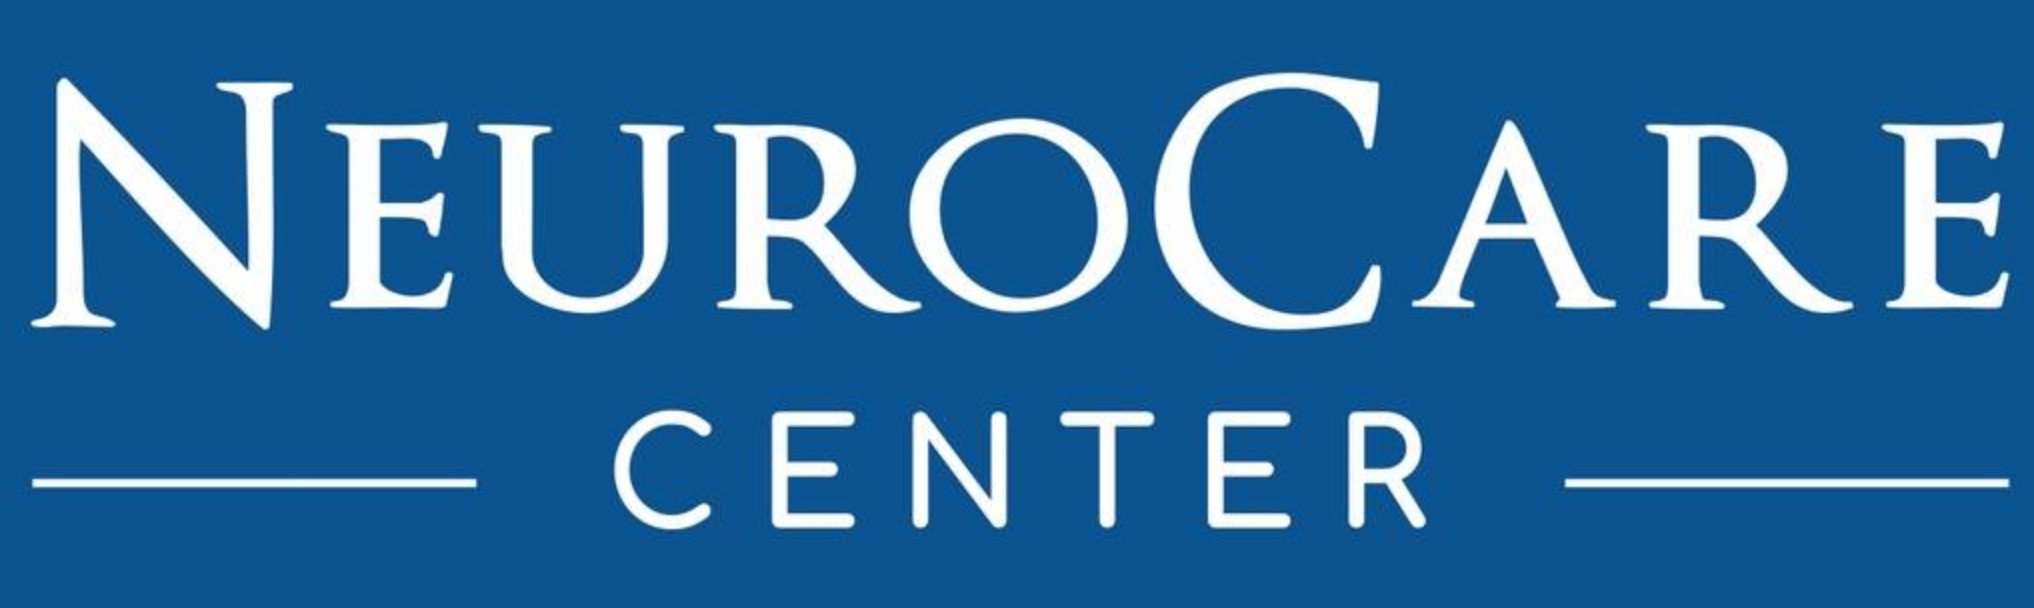 Neurocare Center logo